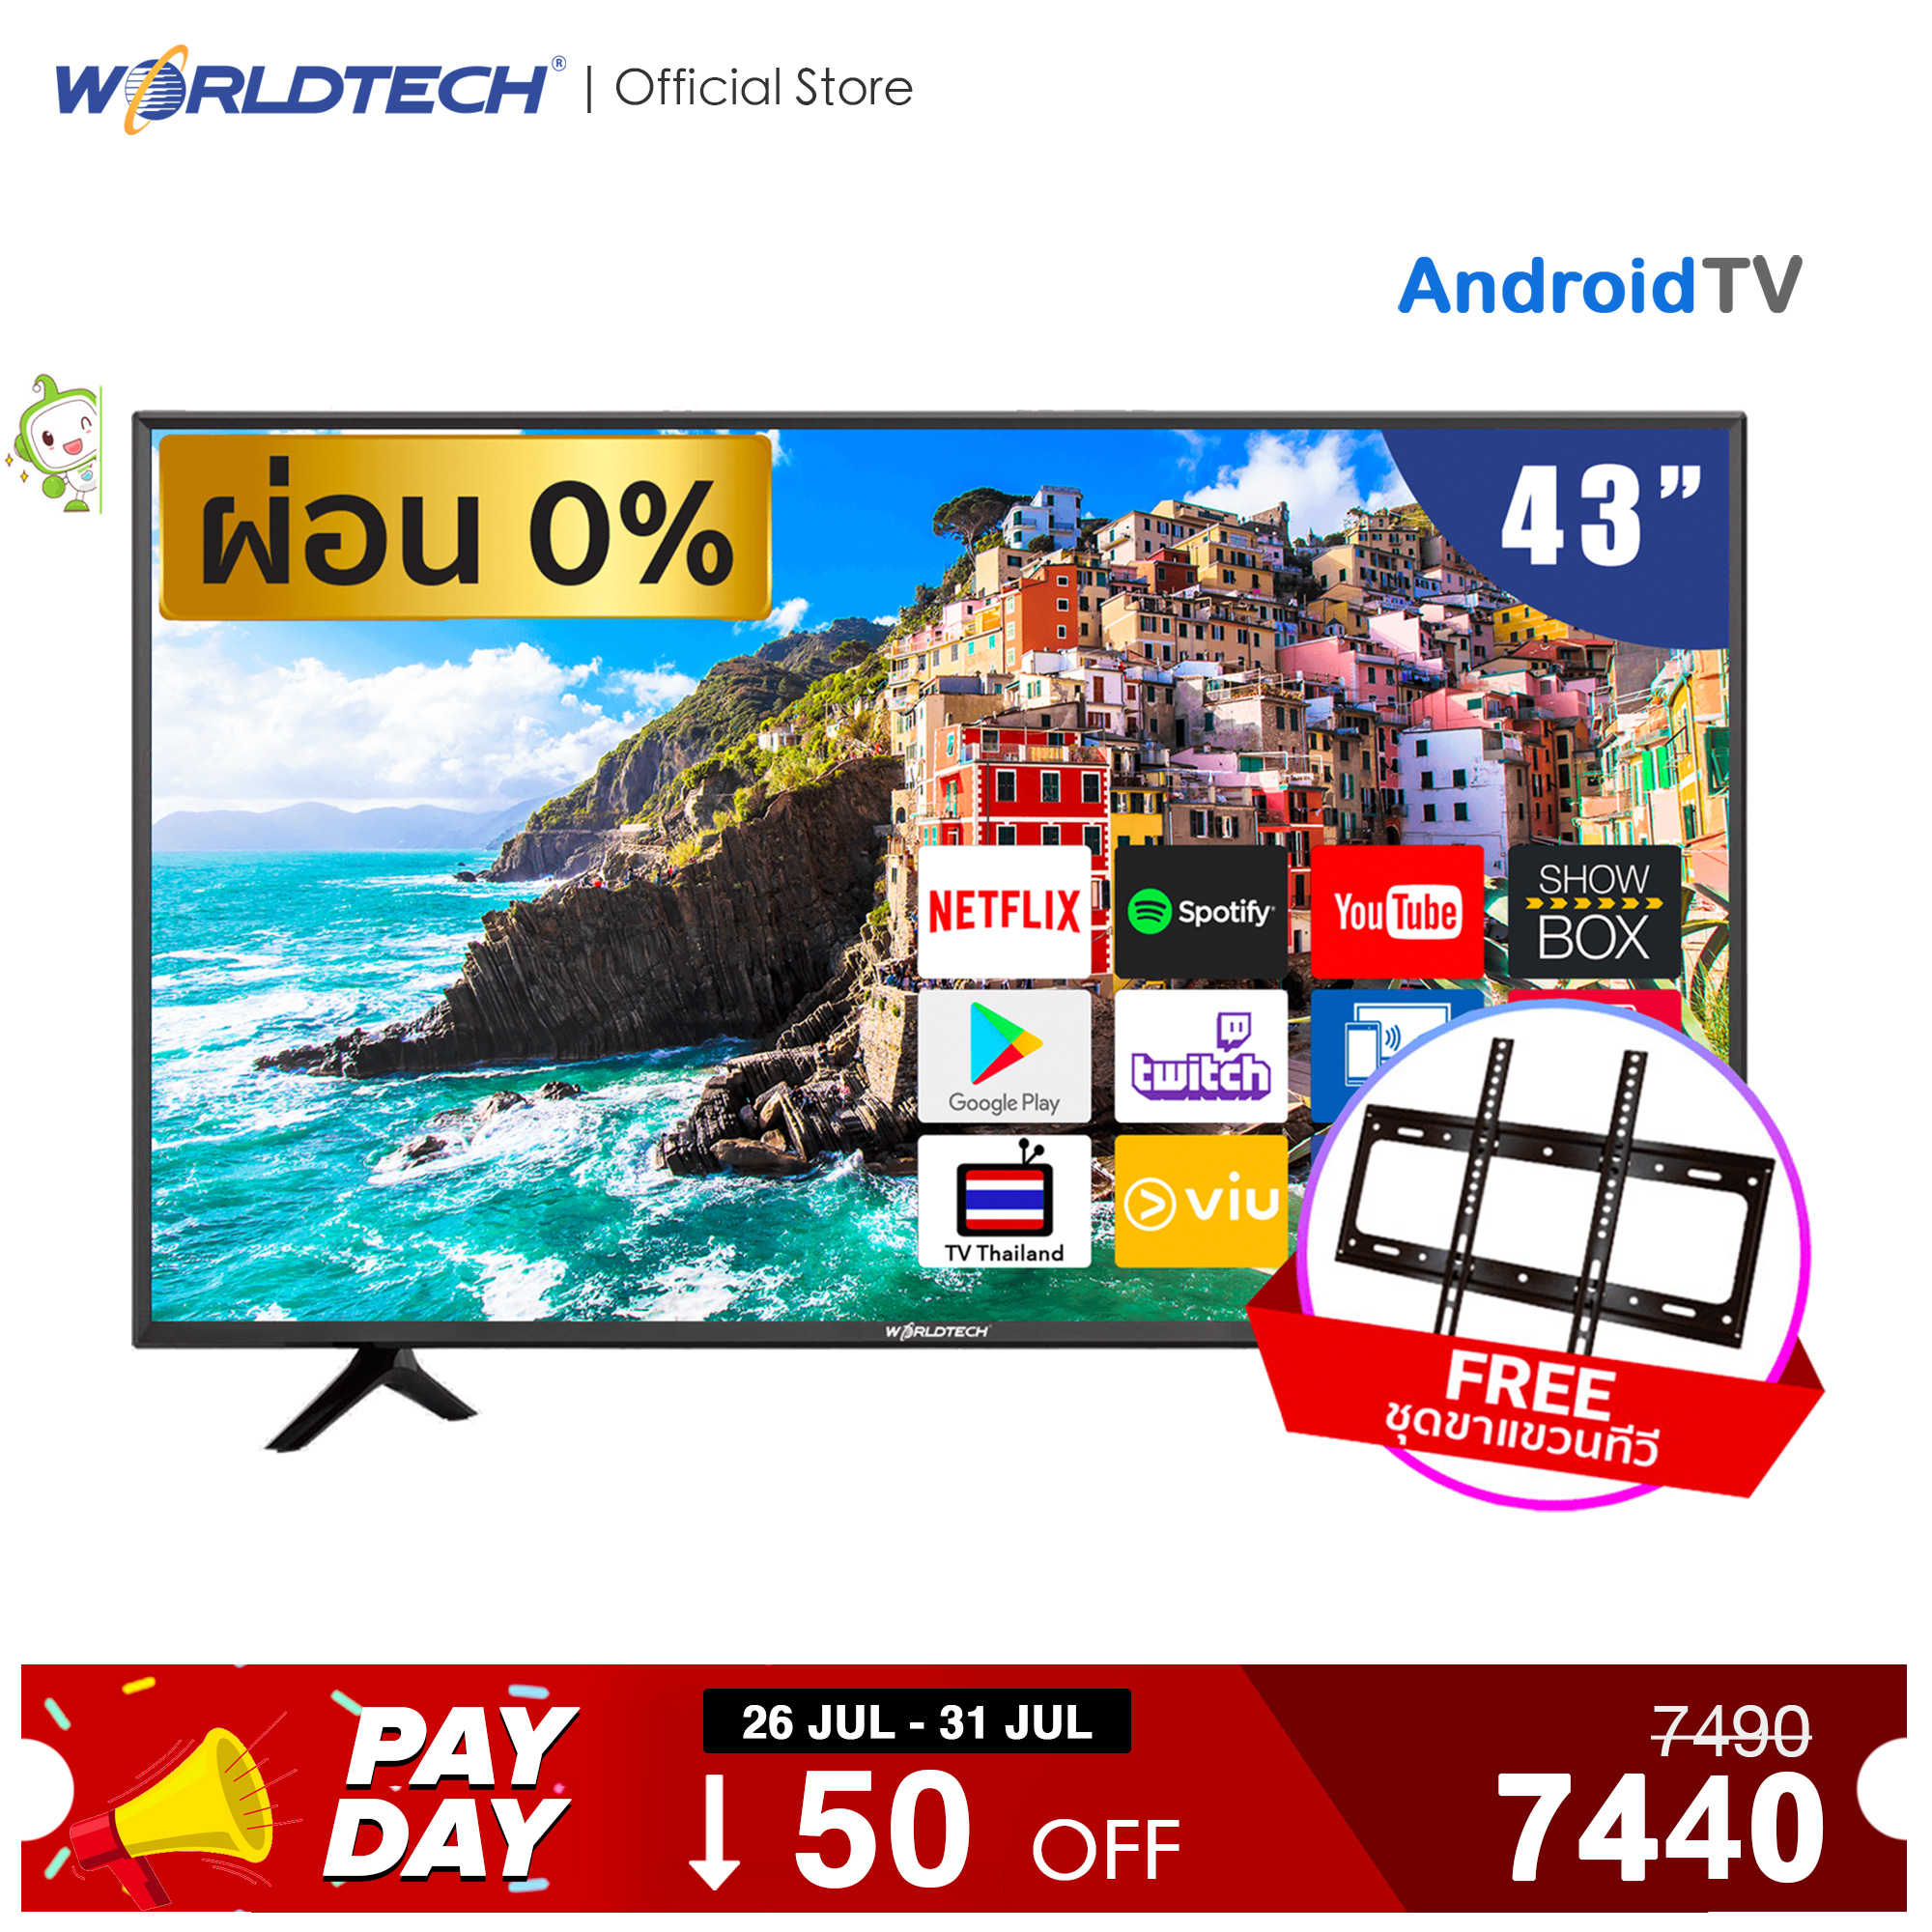 Worldtech 43 นิ้ว Full HD โทรทัศน์ ขนาด 43 นิ้ว (รวมขอบ) Youtube/Internet Smart TV แอนดรอย สมาร์ททีวี + แถม ขาแขวนทีวี เข้าเซ็ต ฟรีสาย HDMI ราคาพิเศษ